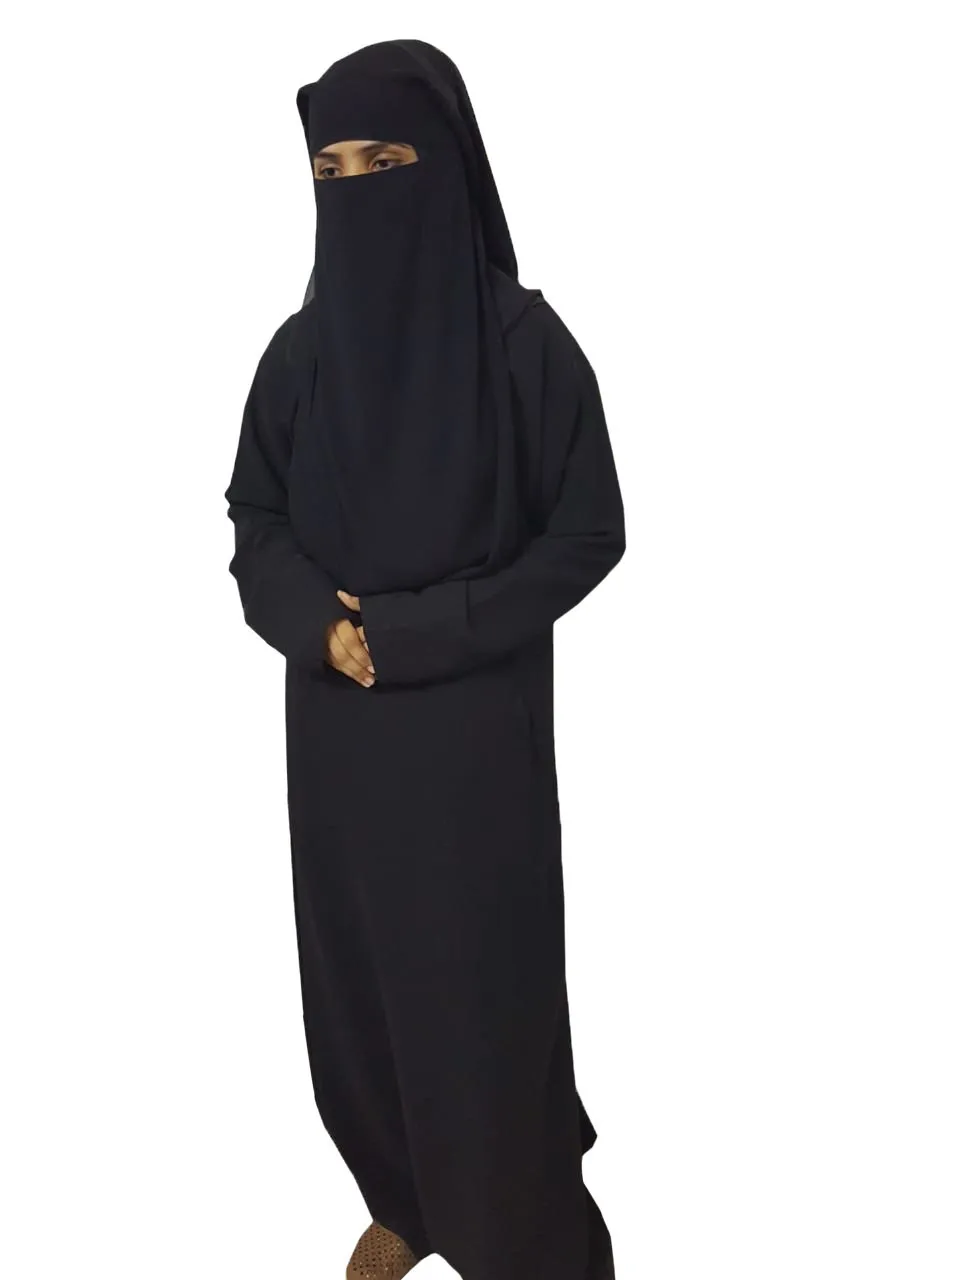 Double Layer Niqab Buy Niqab Two Layerdouble Layer Neqabmuslimah